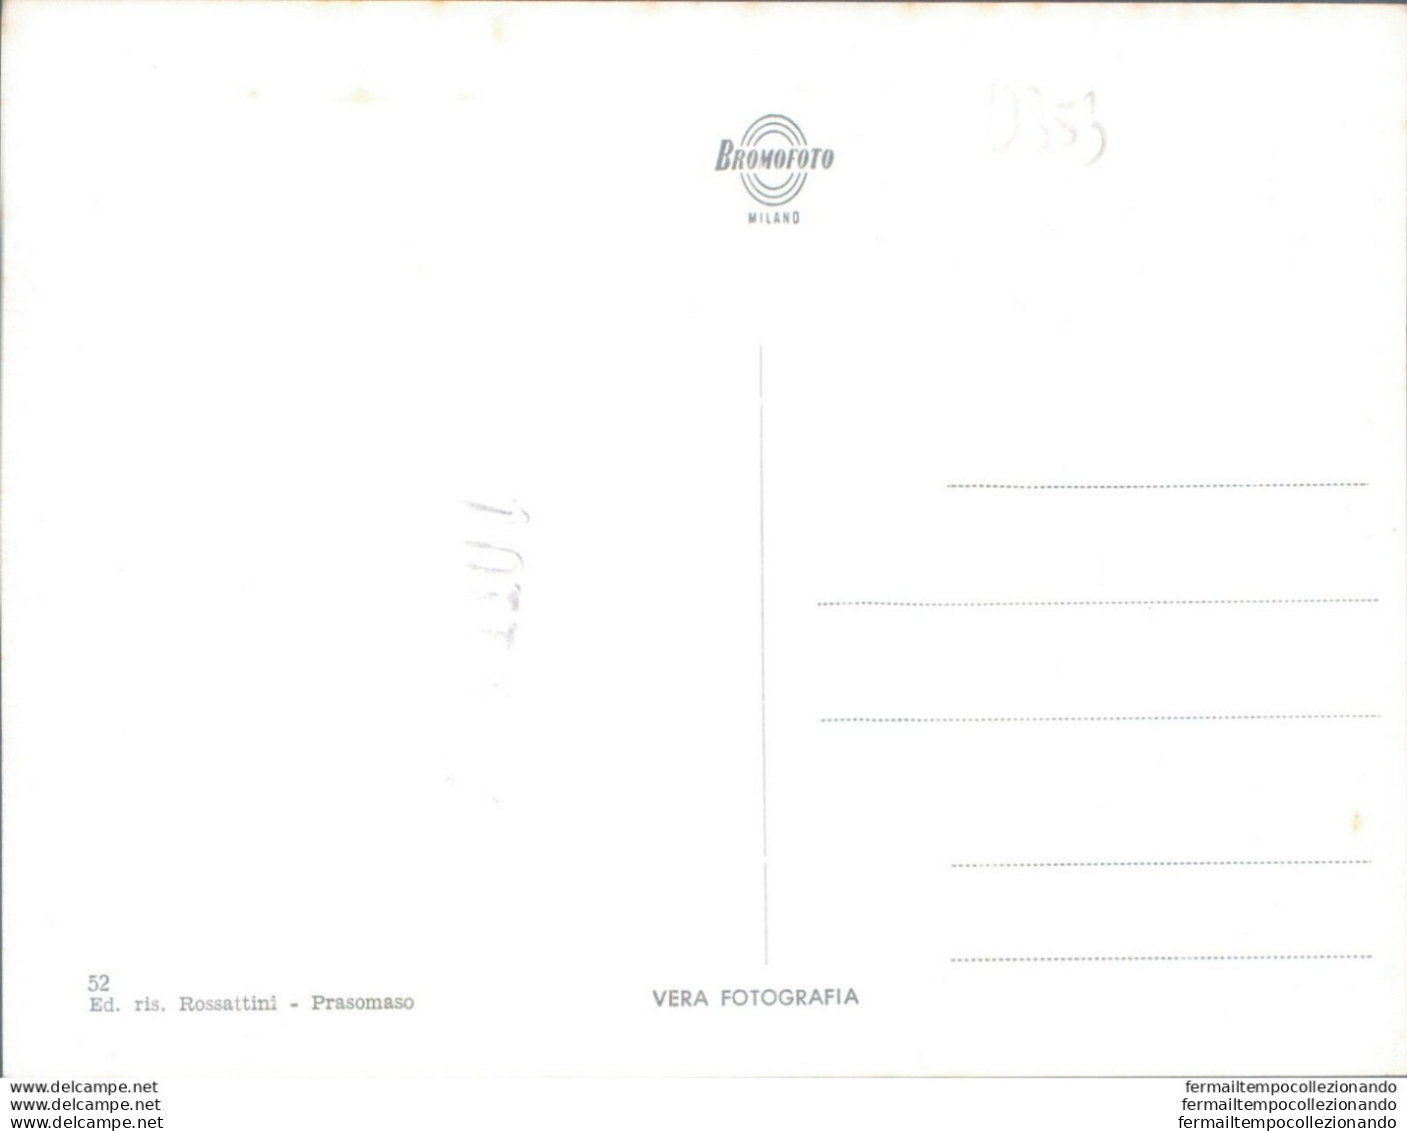 D353 - Cartolina  Provincia Di Sondrio- Prasomaso 4 Vedute - Sondrio